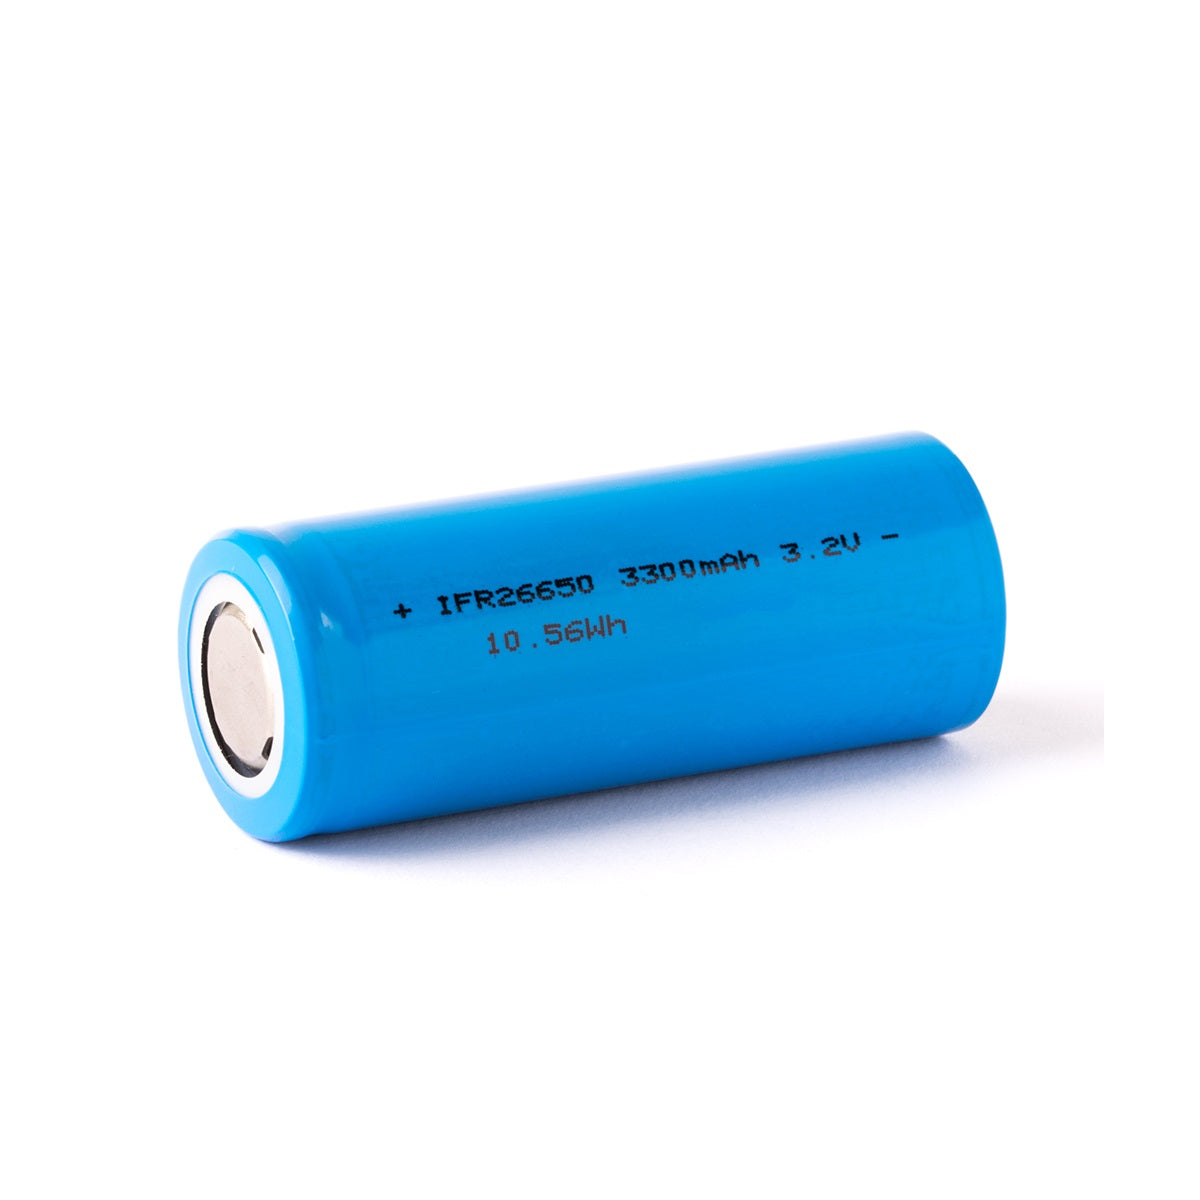 Orange A Grade IFR26650 3300mAh (3c) LiFePO4 Battery